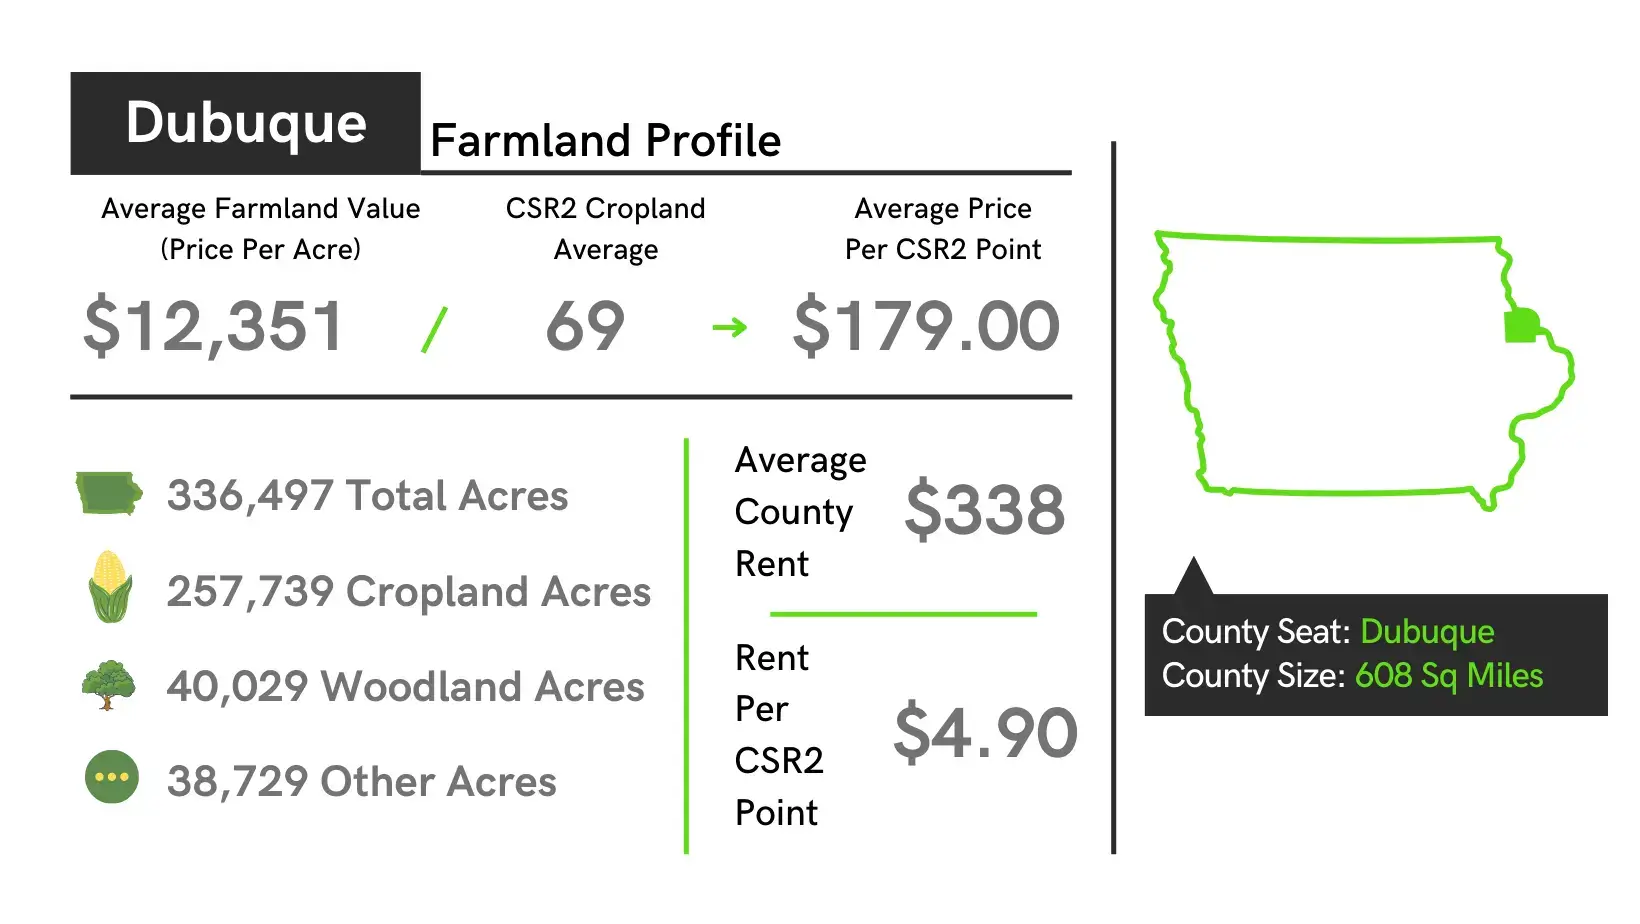 Dubuque County Farmland Profile